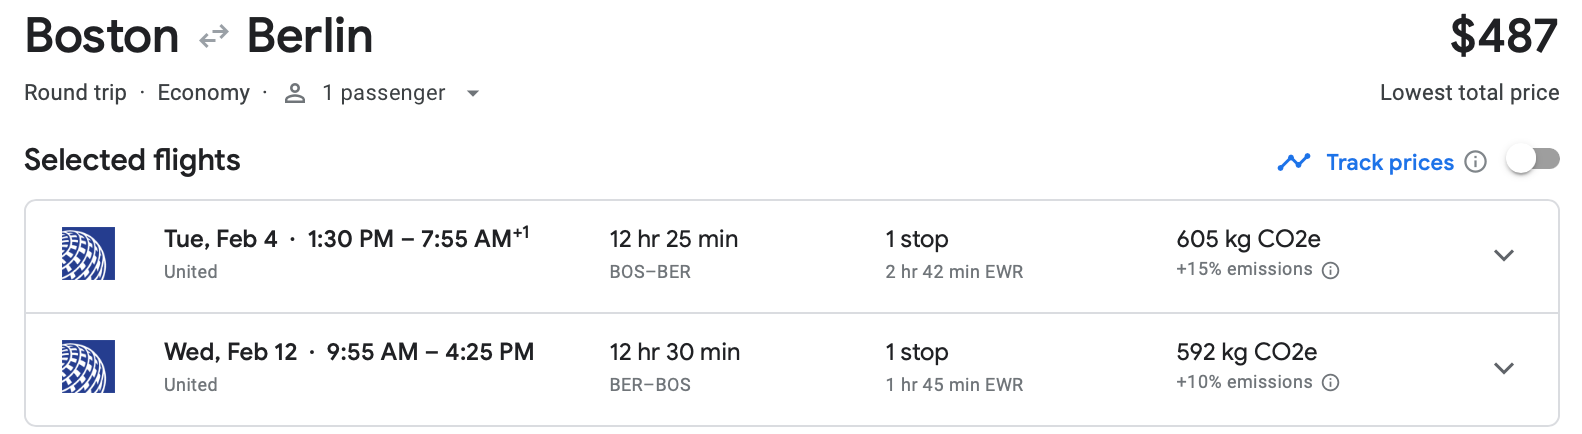 Google Flights estimate for roundtrip flight from Boston to Berlin